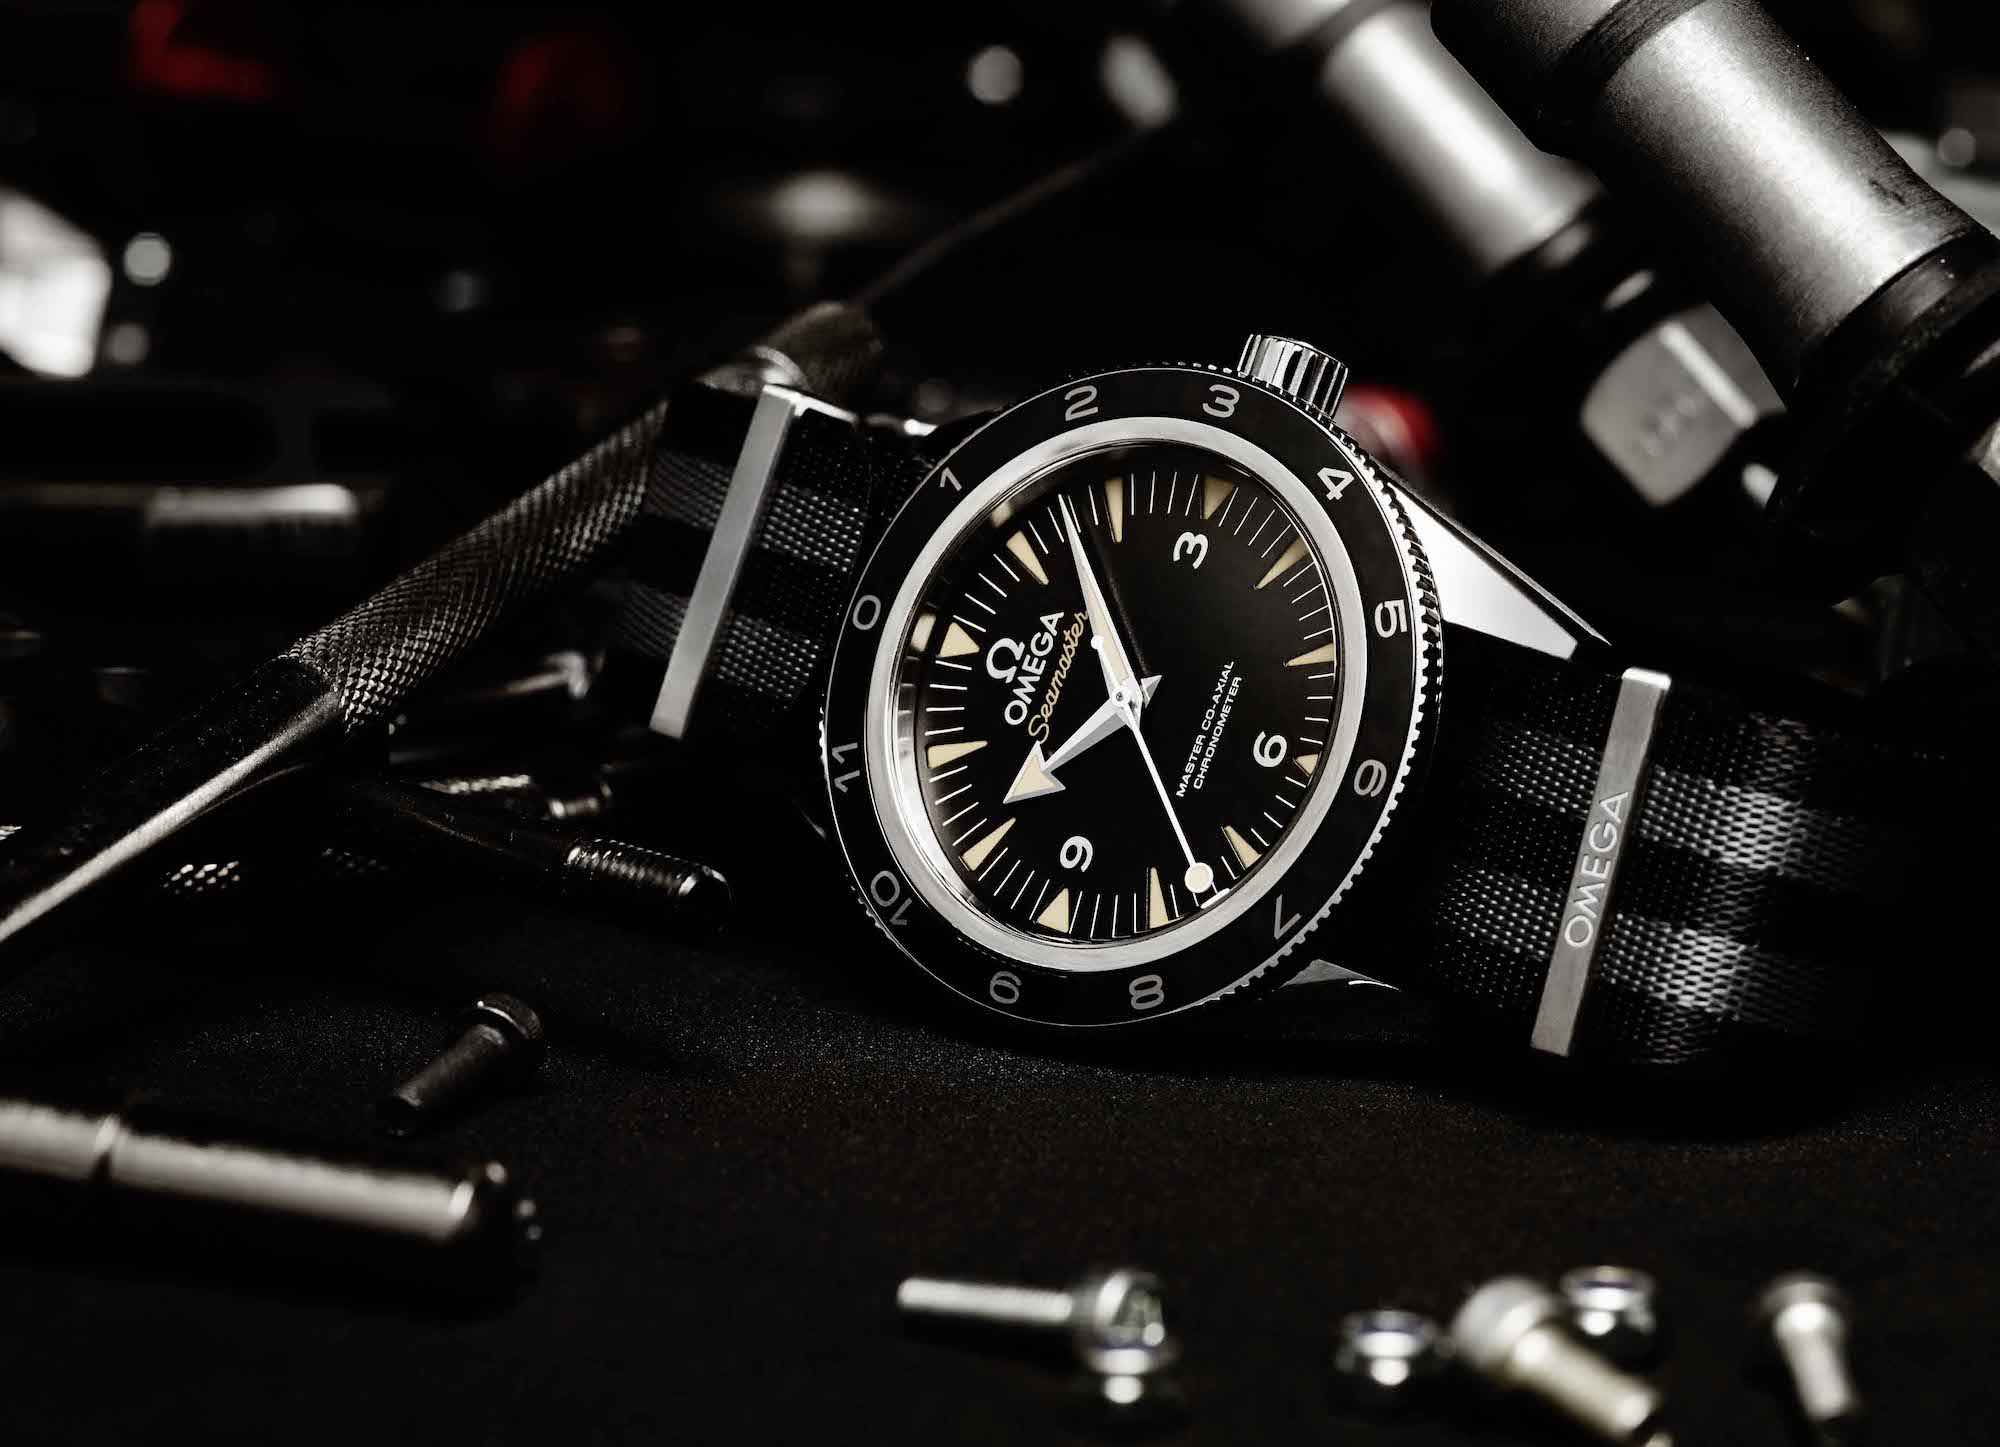 OMEGA Seamaster 300 Master Co Axial Chronometer Spectre Edition 233.32.41.21.01.001 James Bond 2015 Spectre